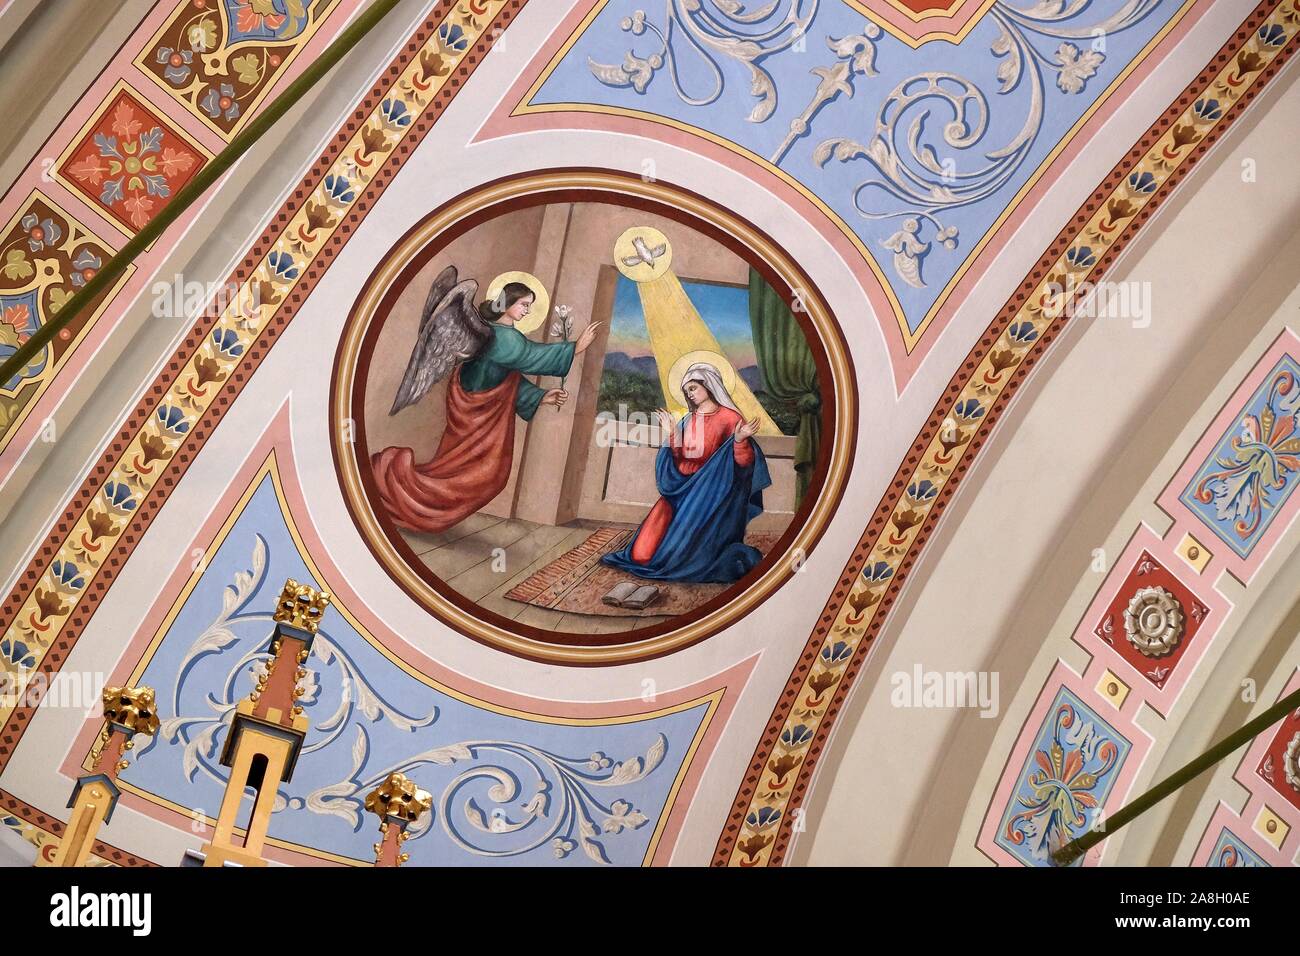 Annunciazione di Maria, affreschi nella chiesa di San Matteo in Stitar, Croazia Foto Stock